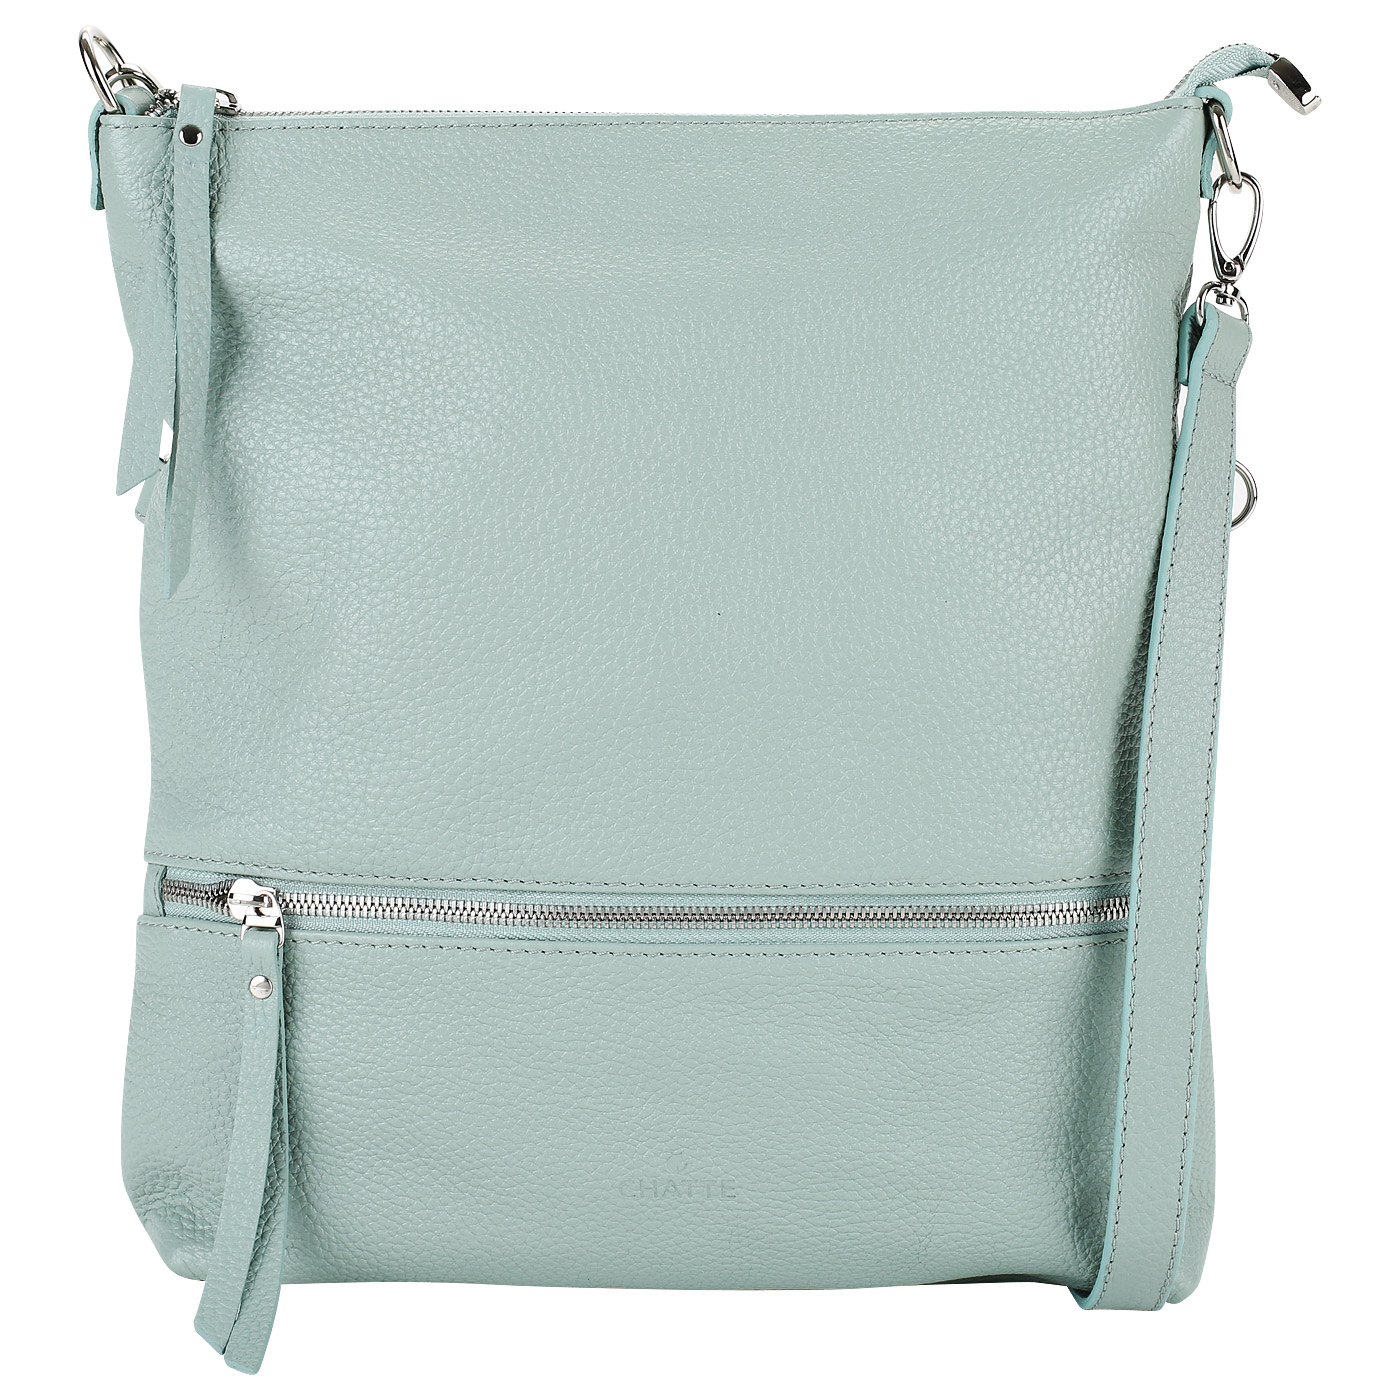 Chatte Женская сумка со съемным плечевым ремешком